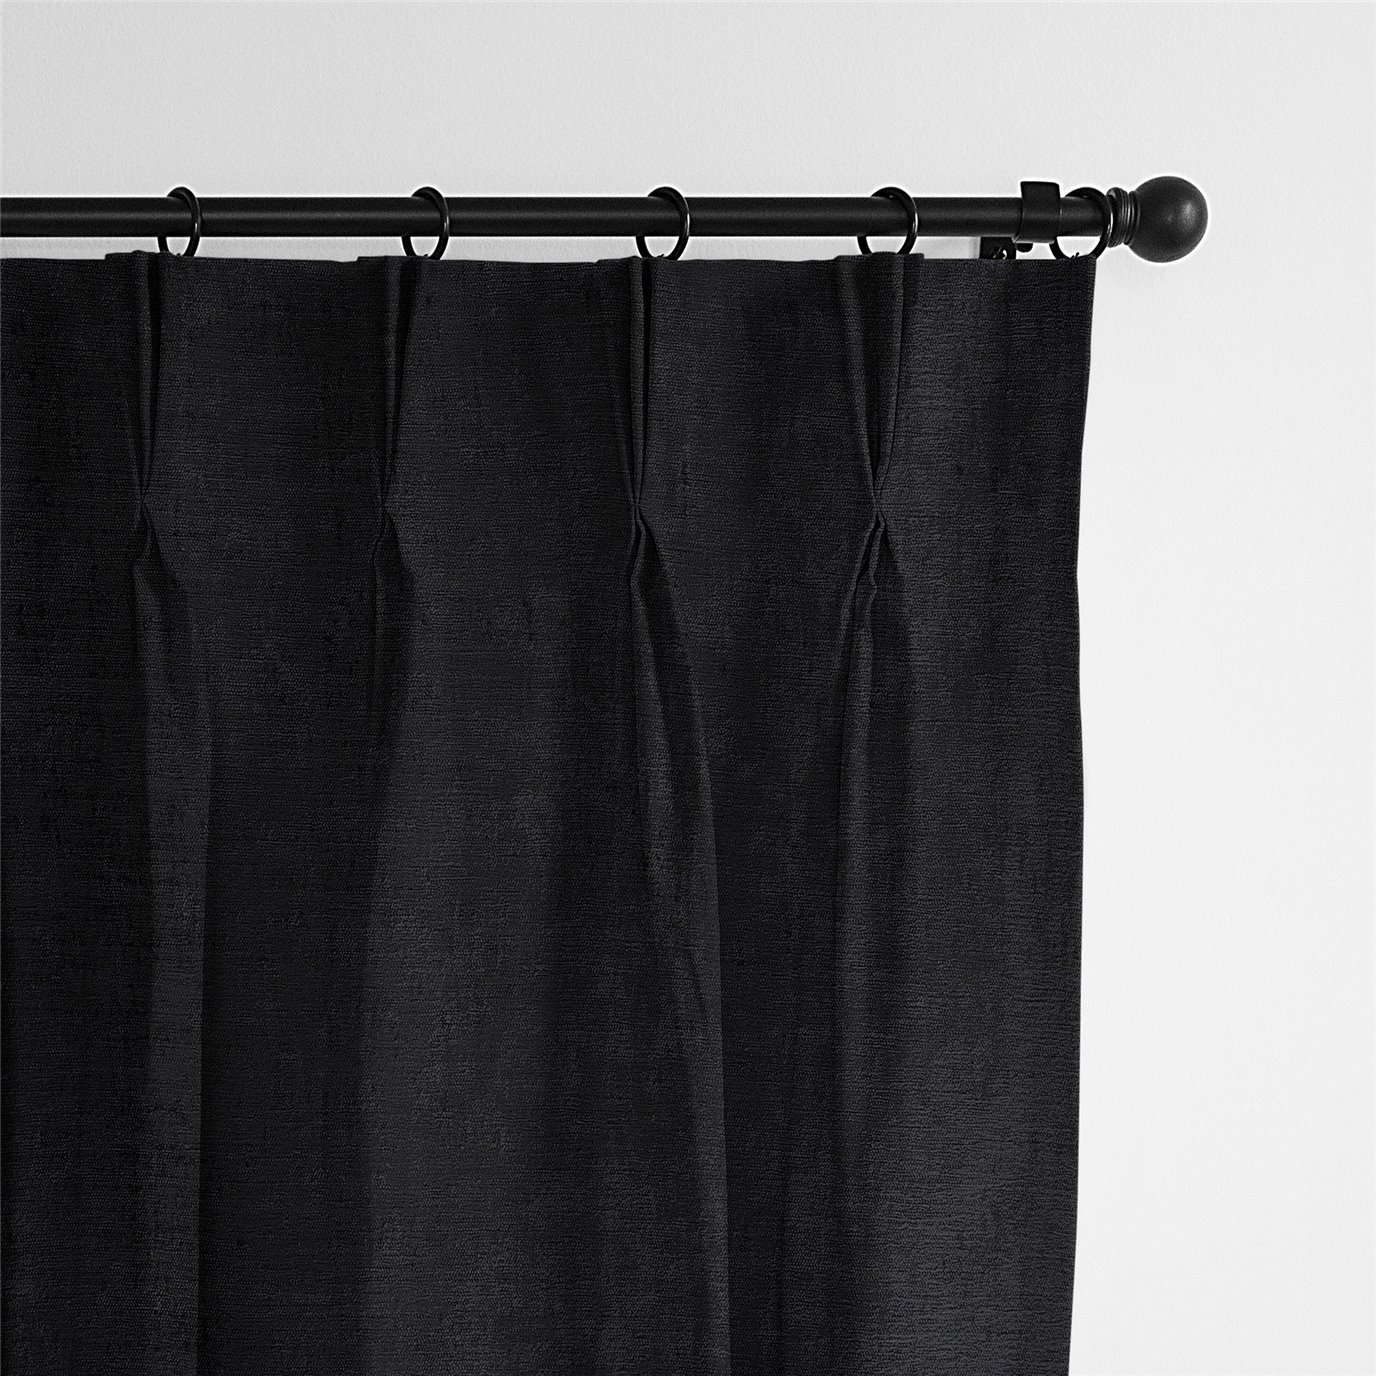 Juno Velvet Black Pinch Pleat Drapery Panel - Pair - Size 40"x96"